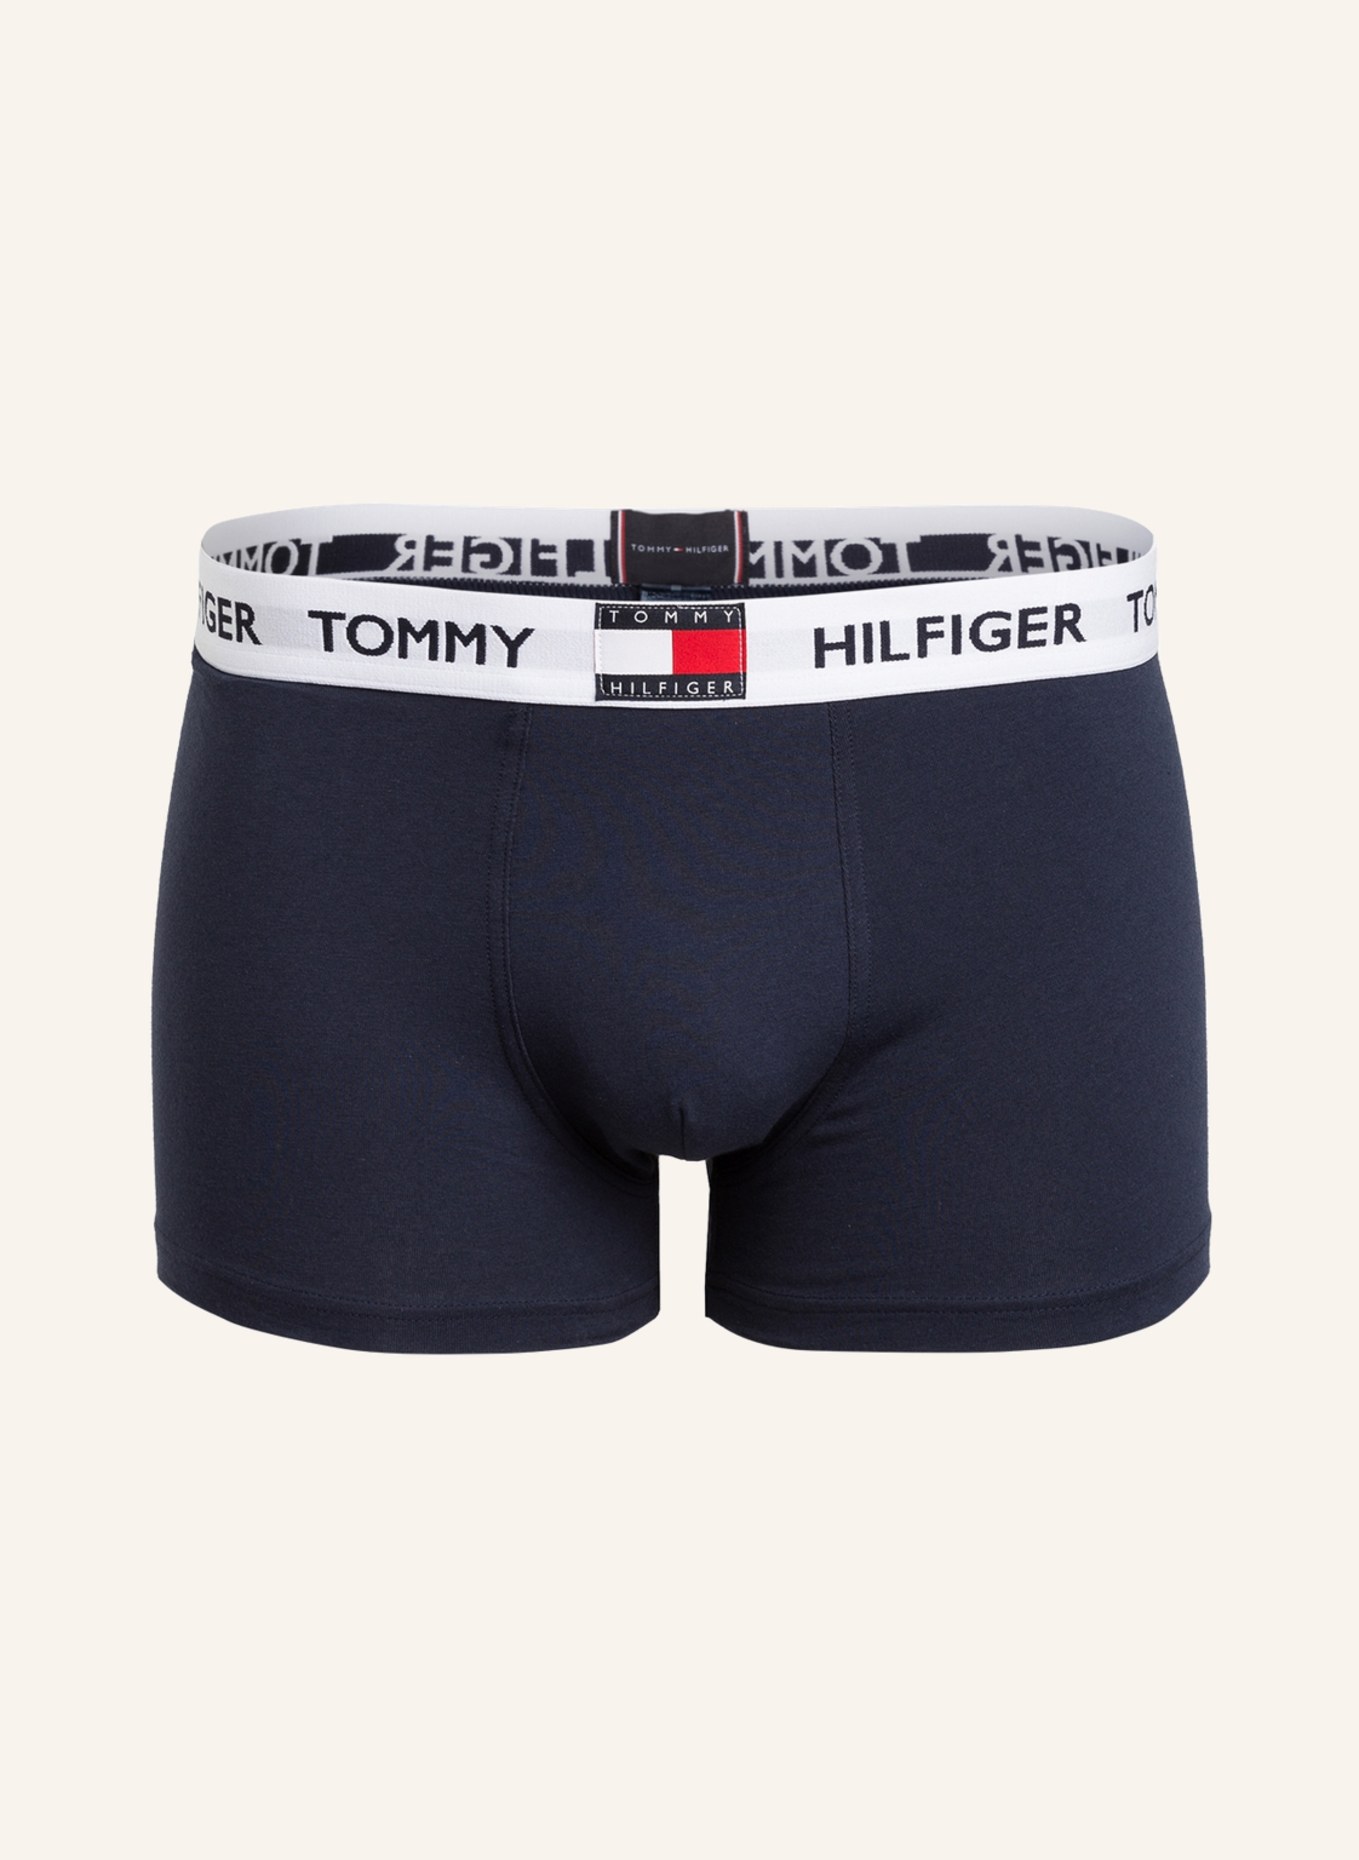 TOMMY HILFIGER Boxershorts, Farbe: BLAU (Bild 1)